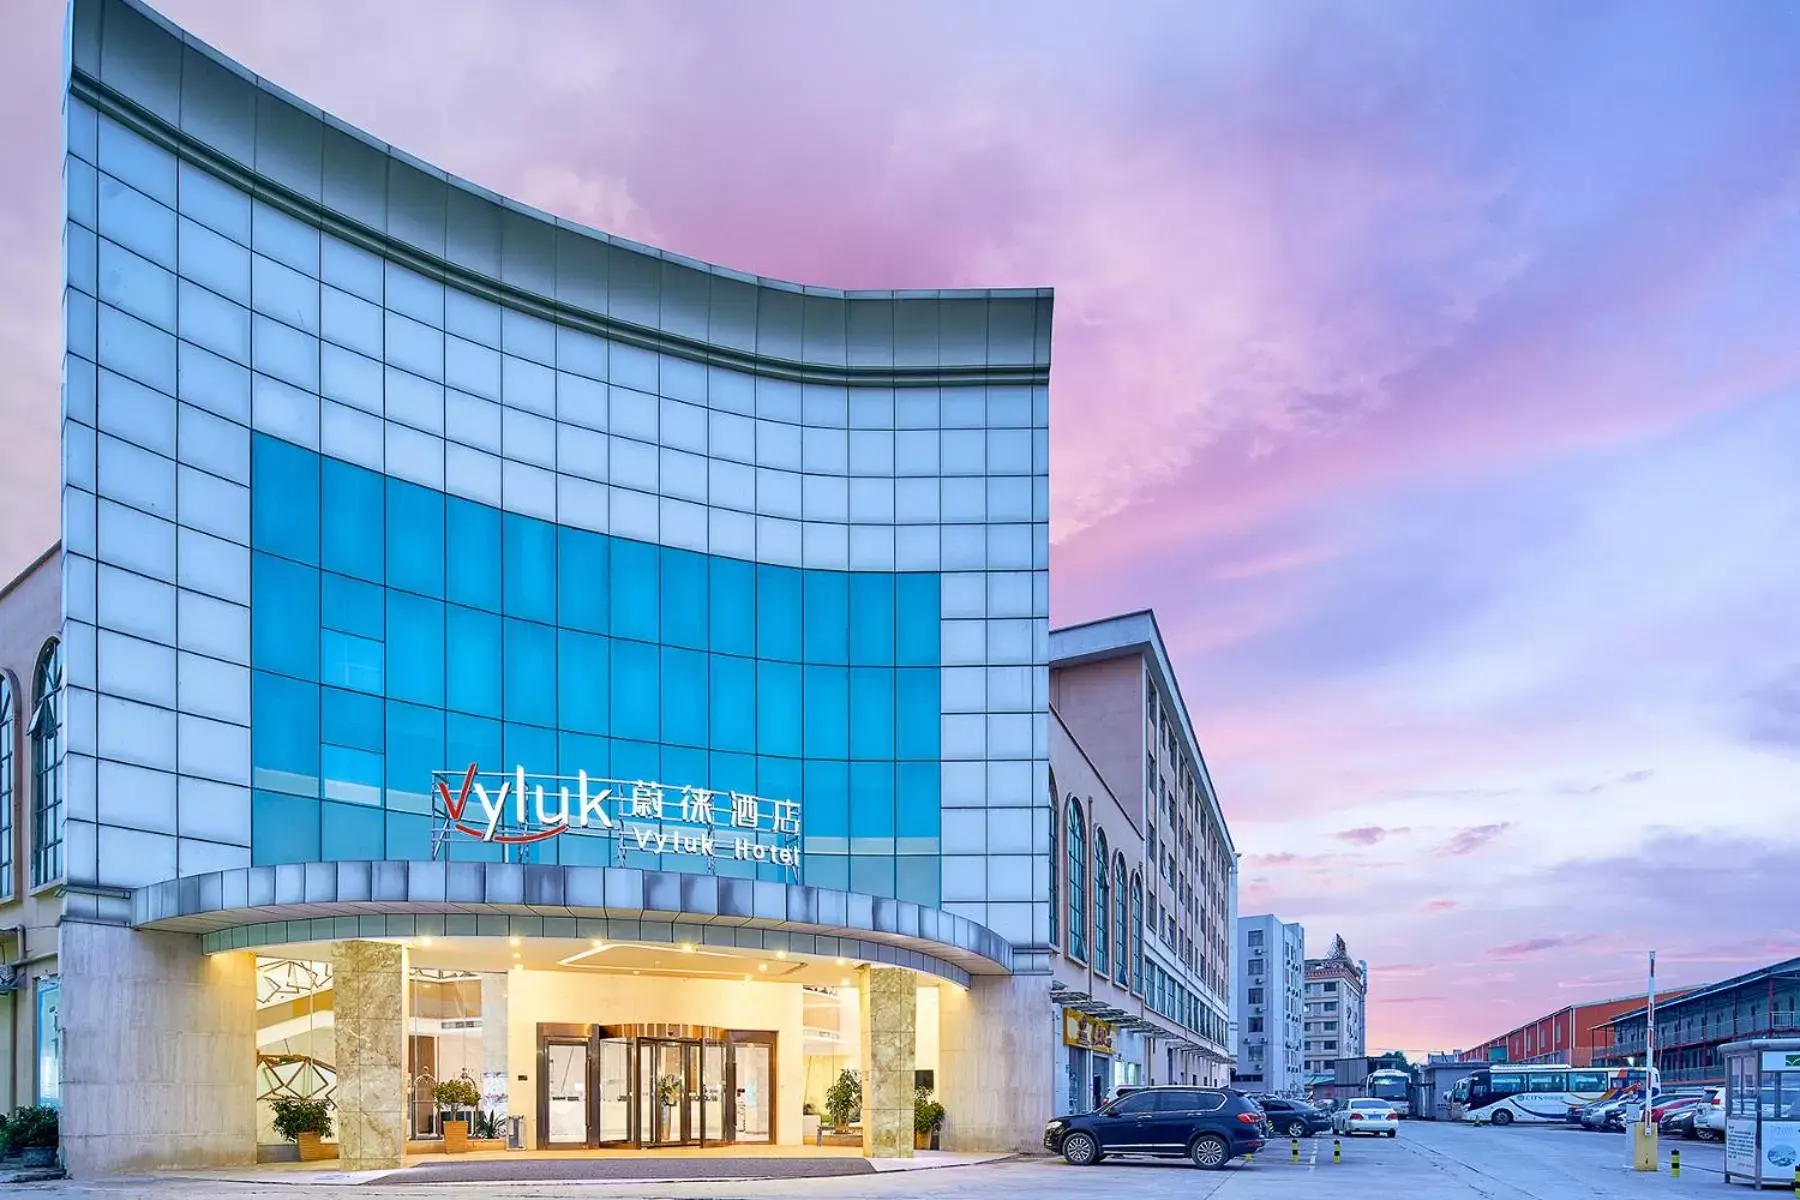 Property building in Vyluk Hotel Guangzhou Baiyun International Airport